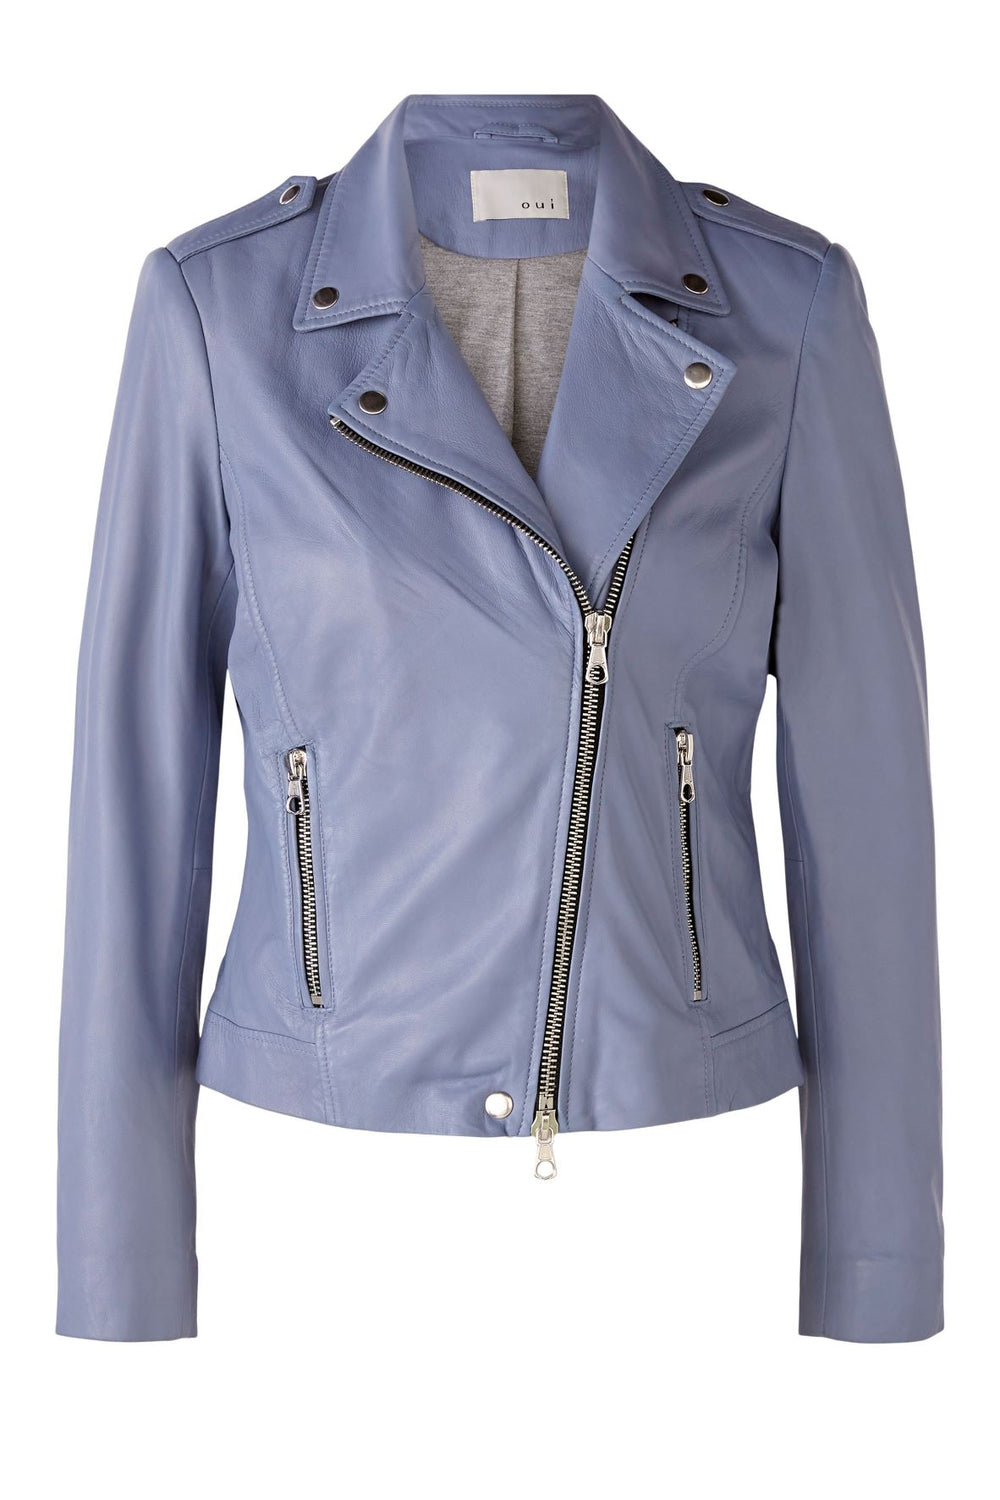 Oui 76138 Leather Jacket dotique light blue leather jacket biker style